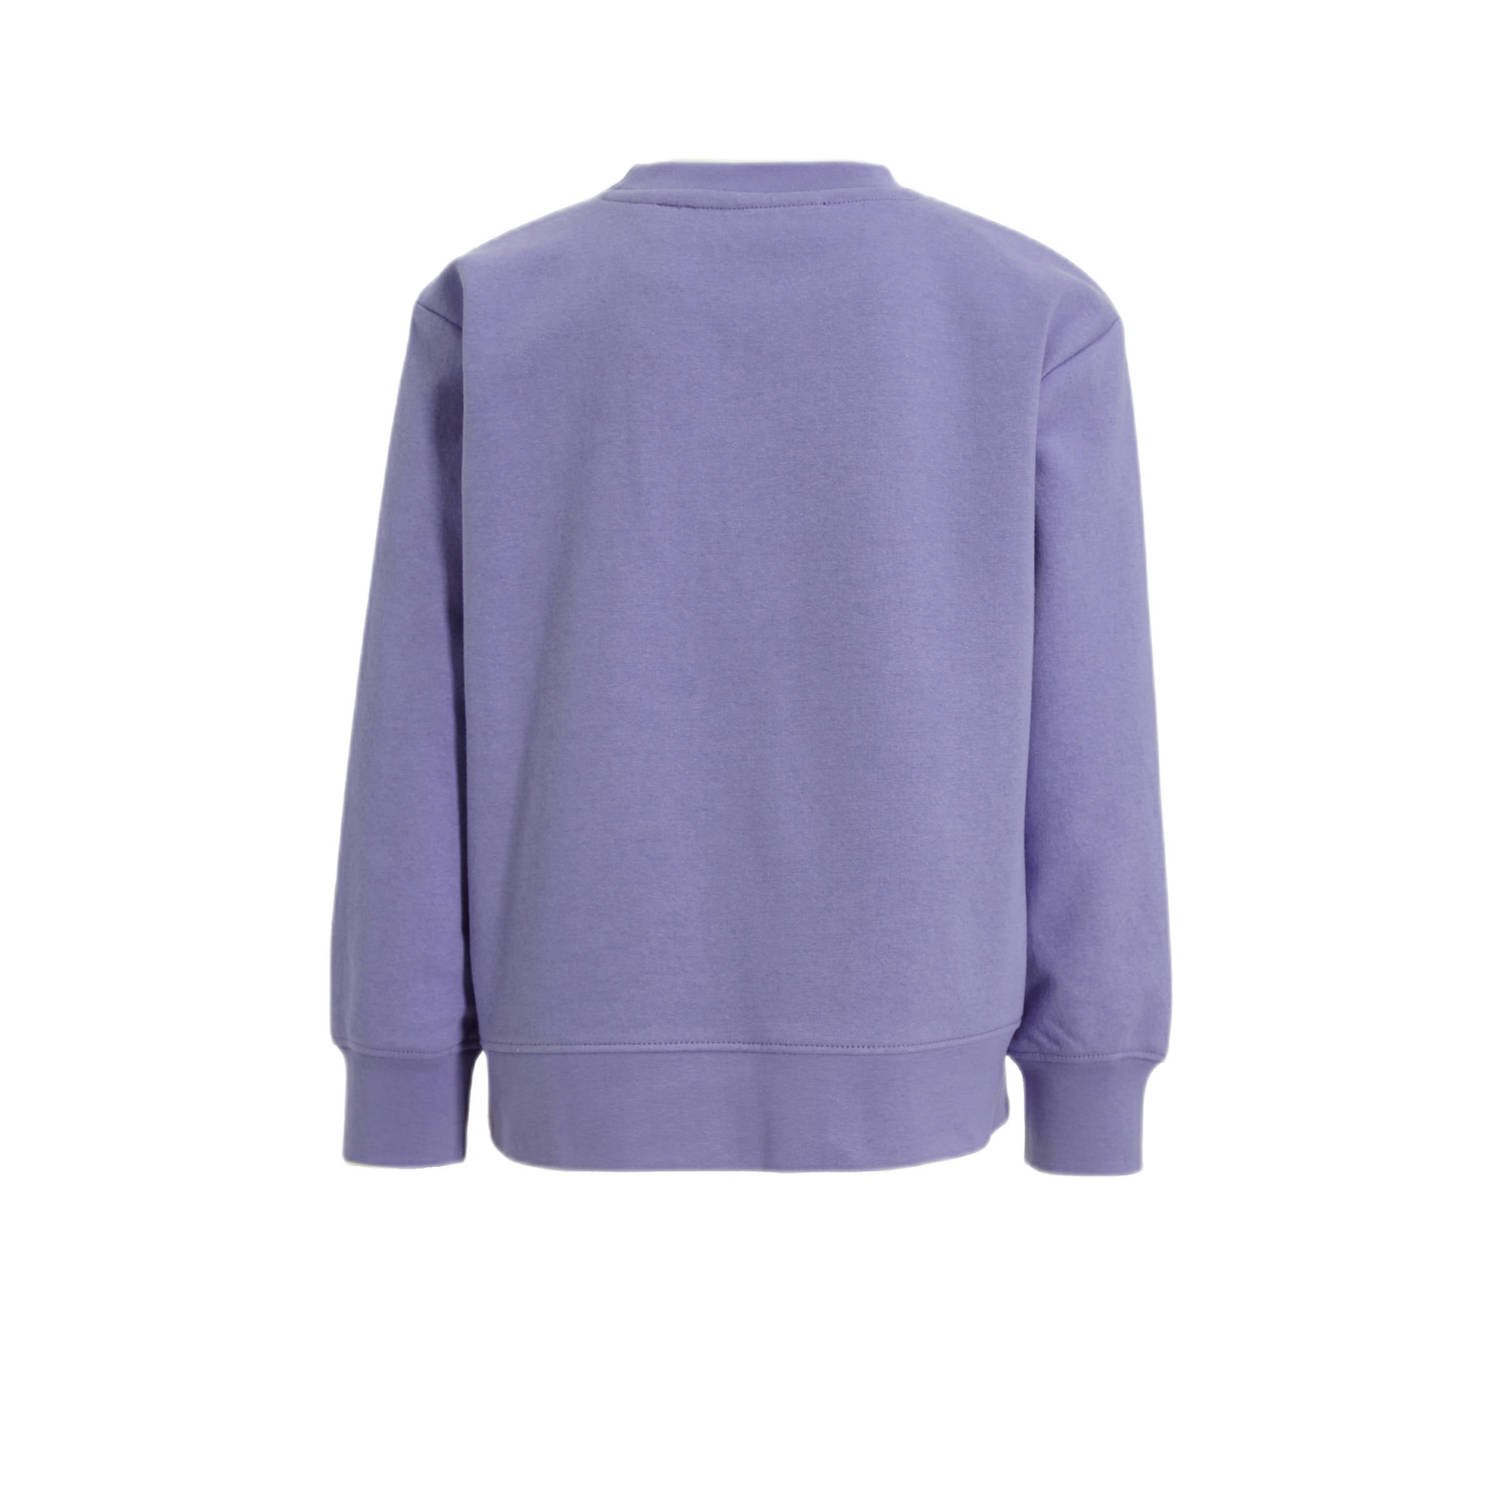 anytime sweater met tekstopdruk lila